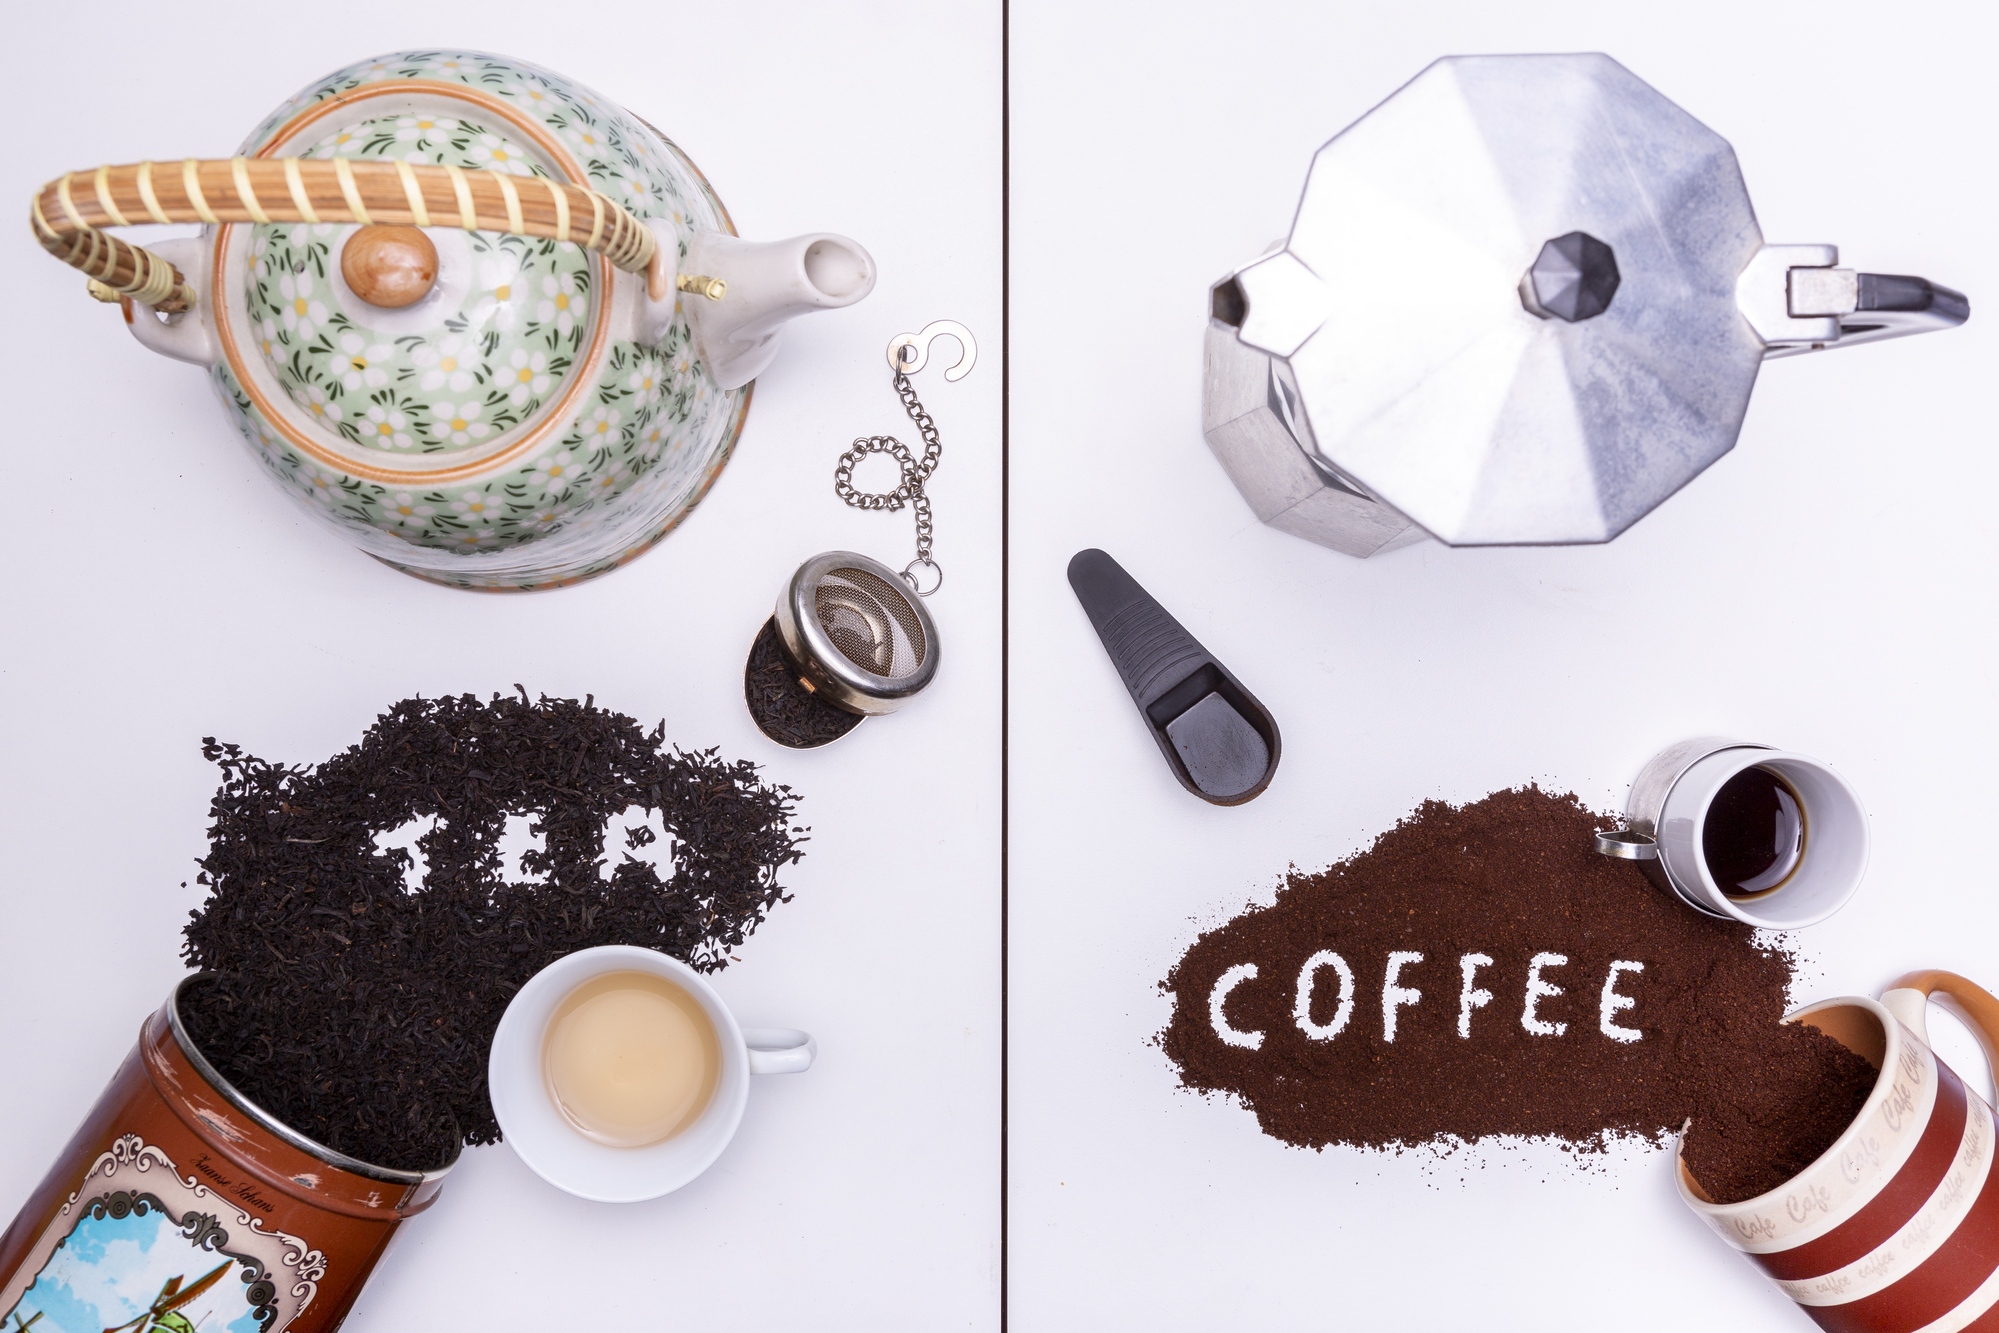 Tea&Coffee Pot эксплуатация. Tea vs Coffee. Леттеринг чем вкуснее кофе тем добрее утро. Tea Pot left on Electric Cooking Heater Danger.